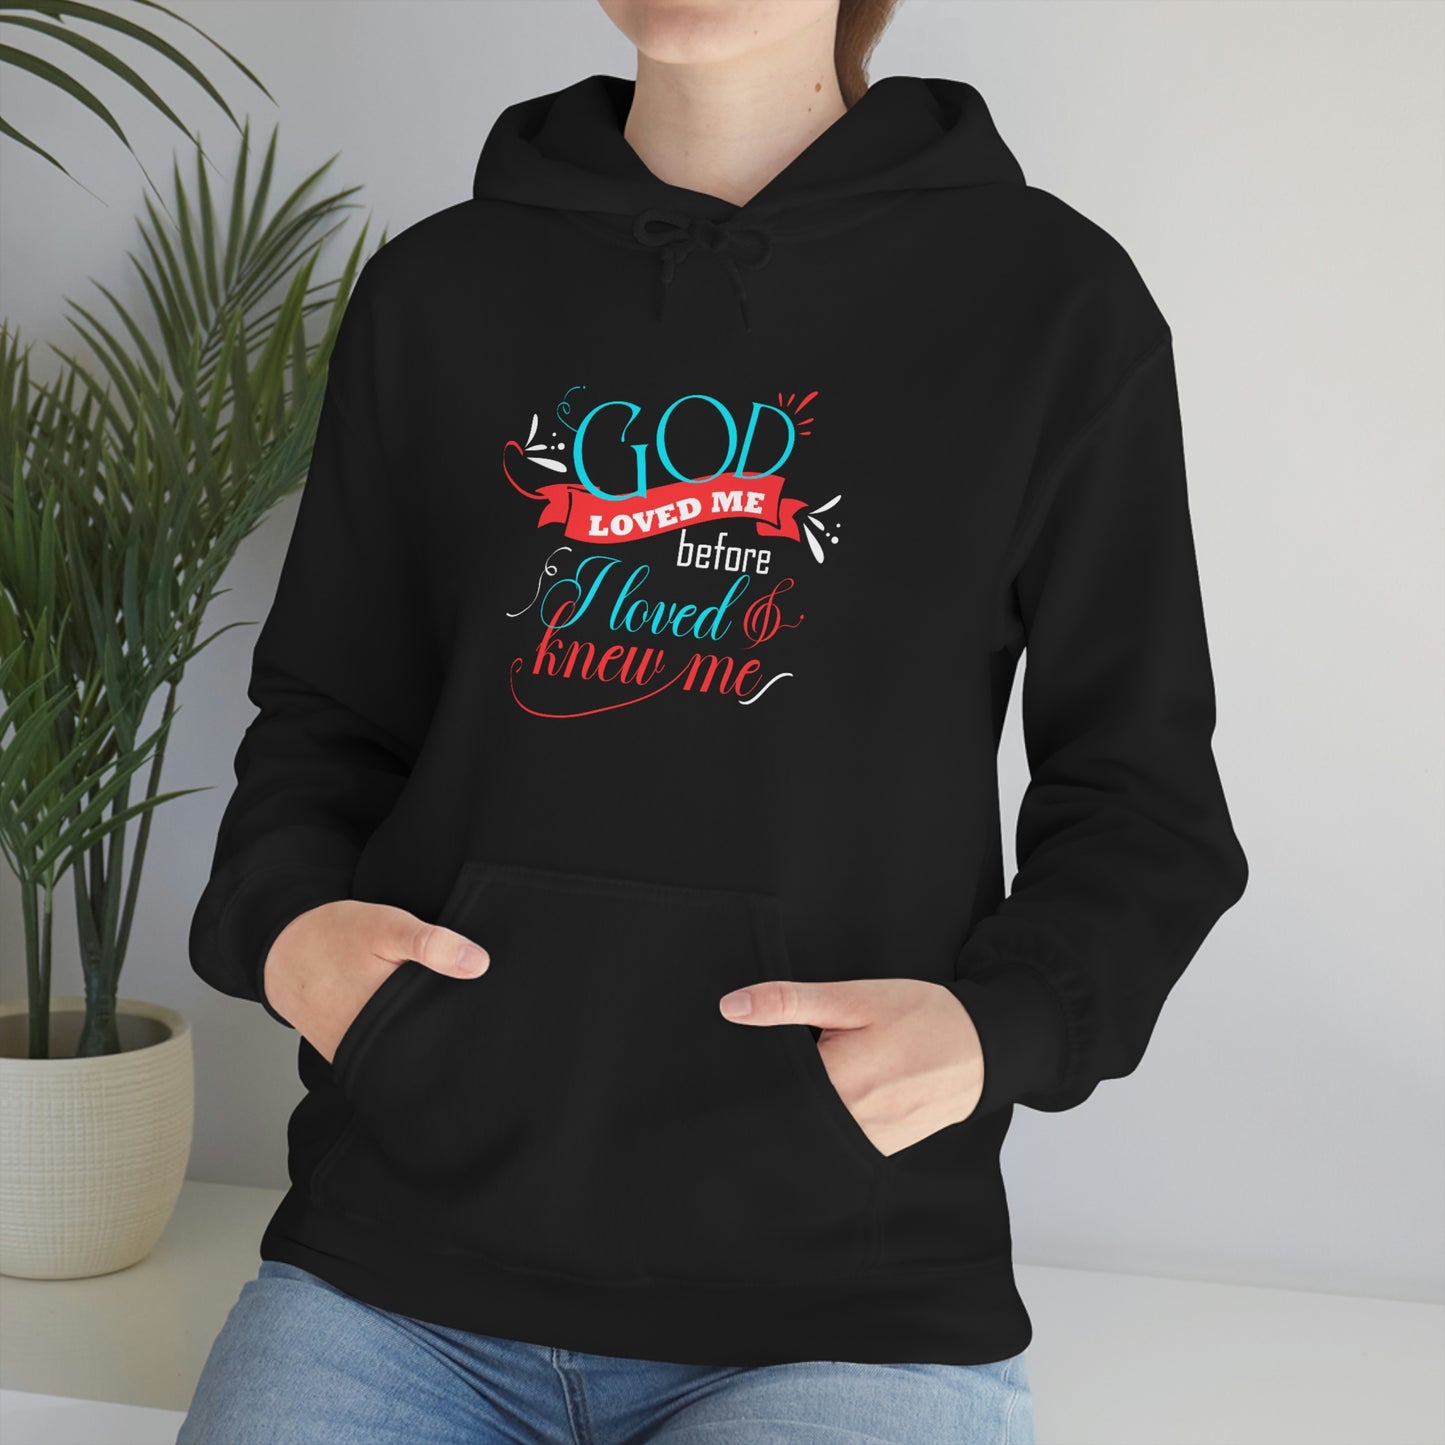 God Love Me Before I Loved & Knew Me Unisex Pull On Hooded sweatshirt